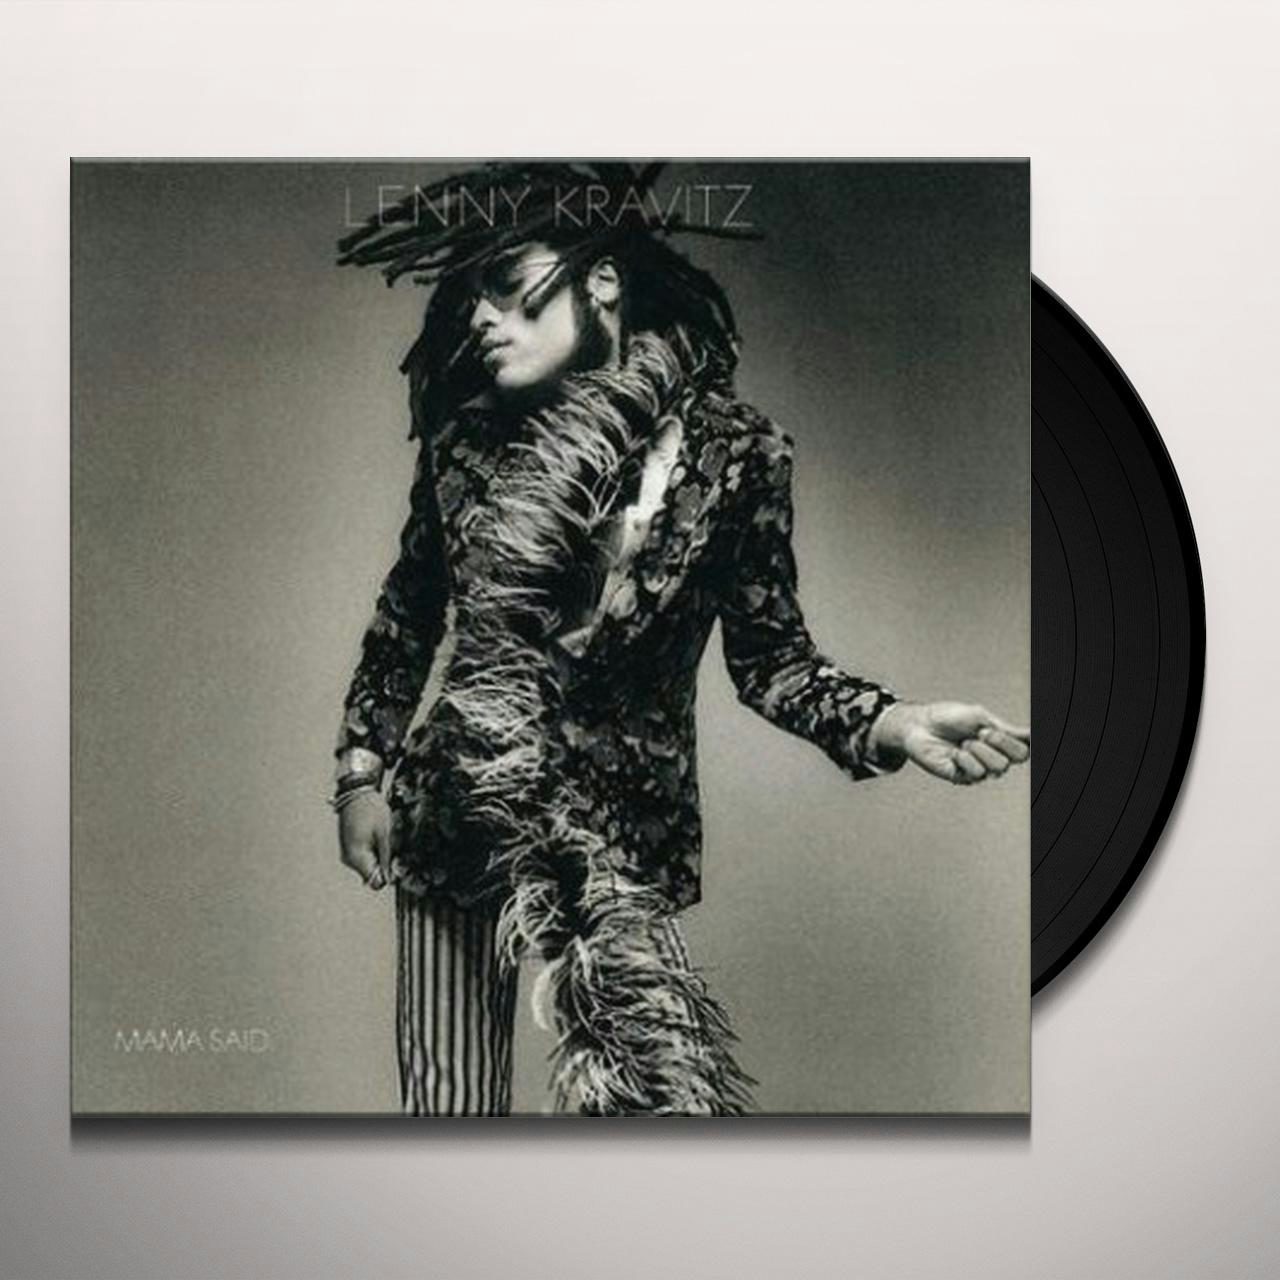 UK盤】LENNY KRAVITZ MAMA SAID レコード - 洋楽